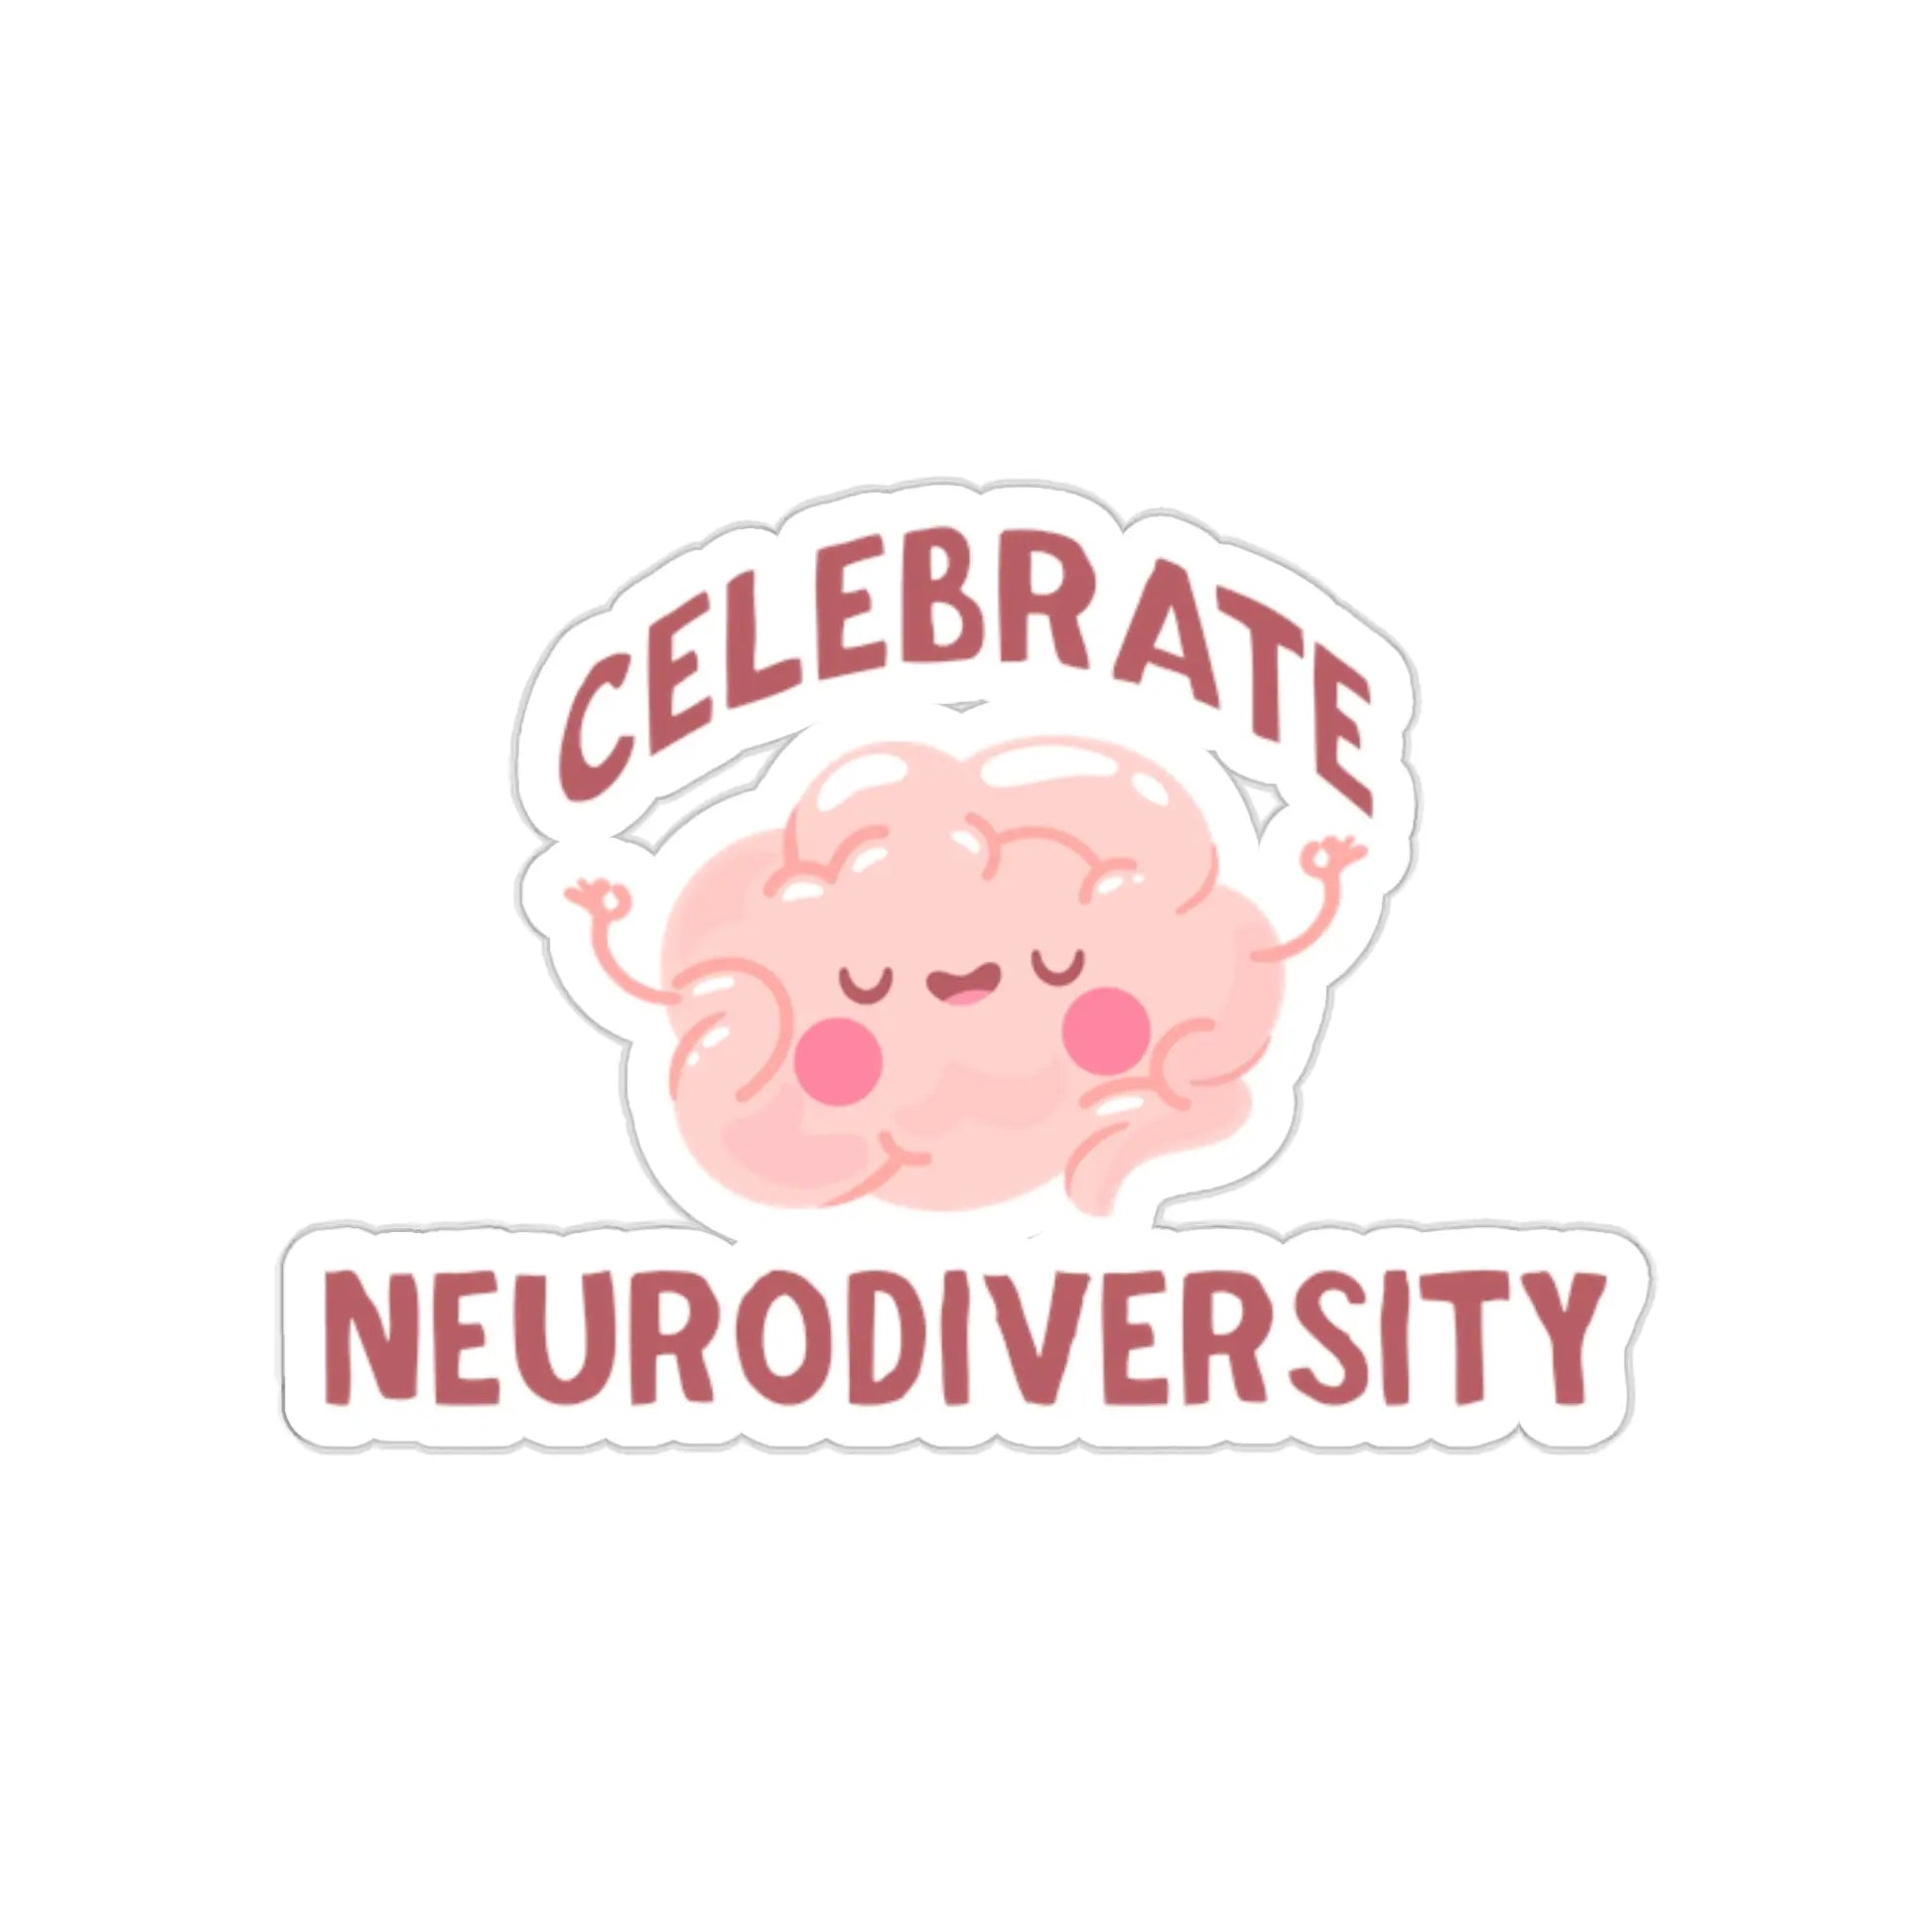 Celebrate Neurodiversity Sticker